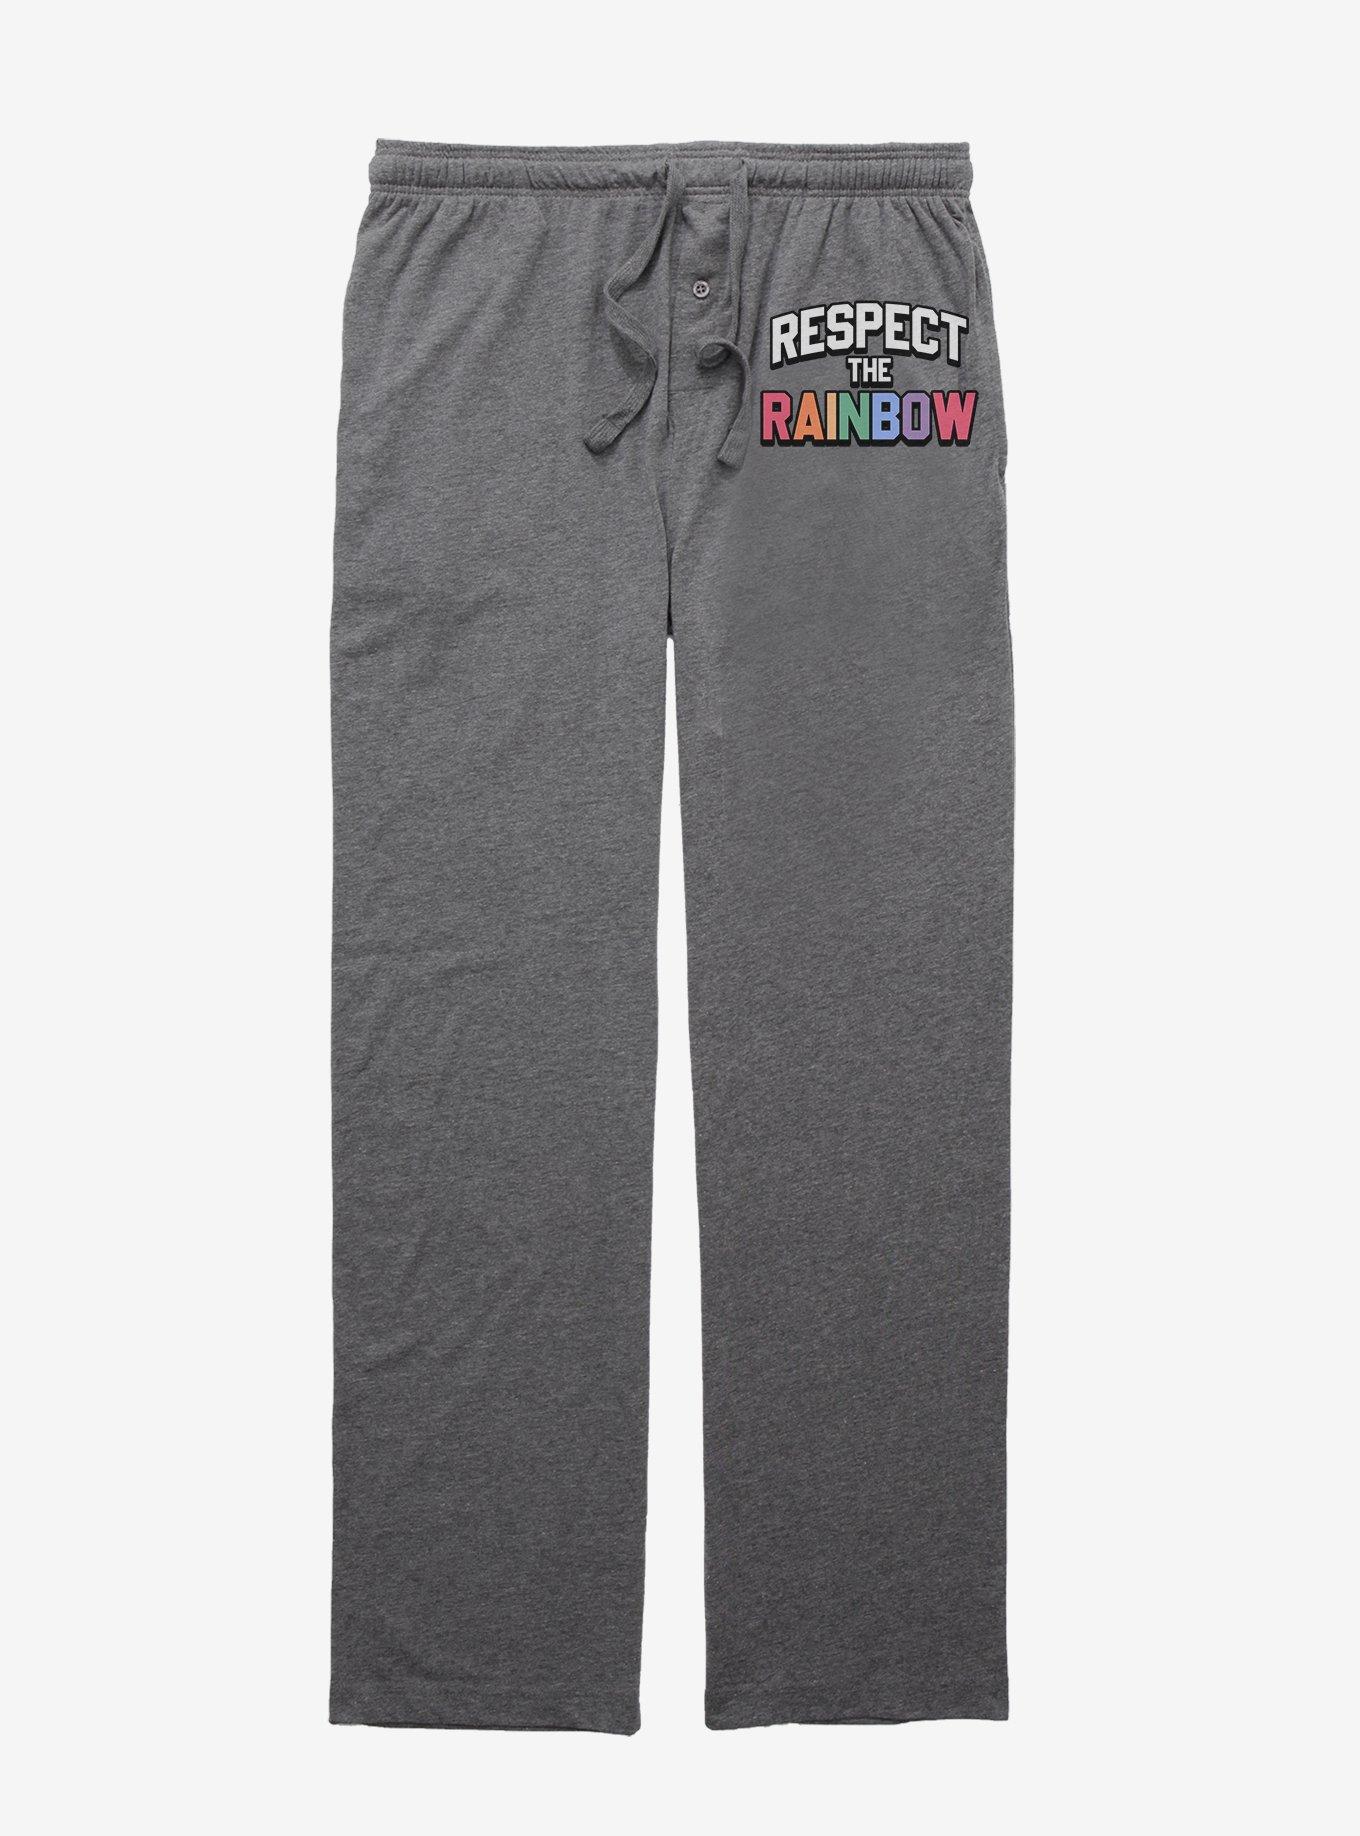 Respect The Rainbow Pajama Pants, GRAPHITE HEATHER, hi-res